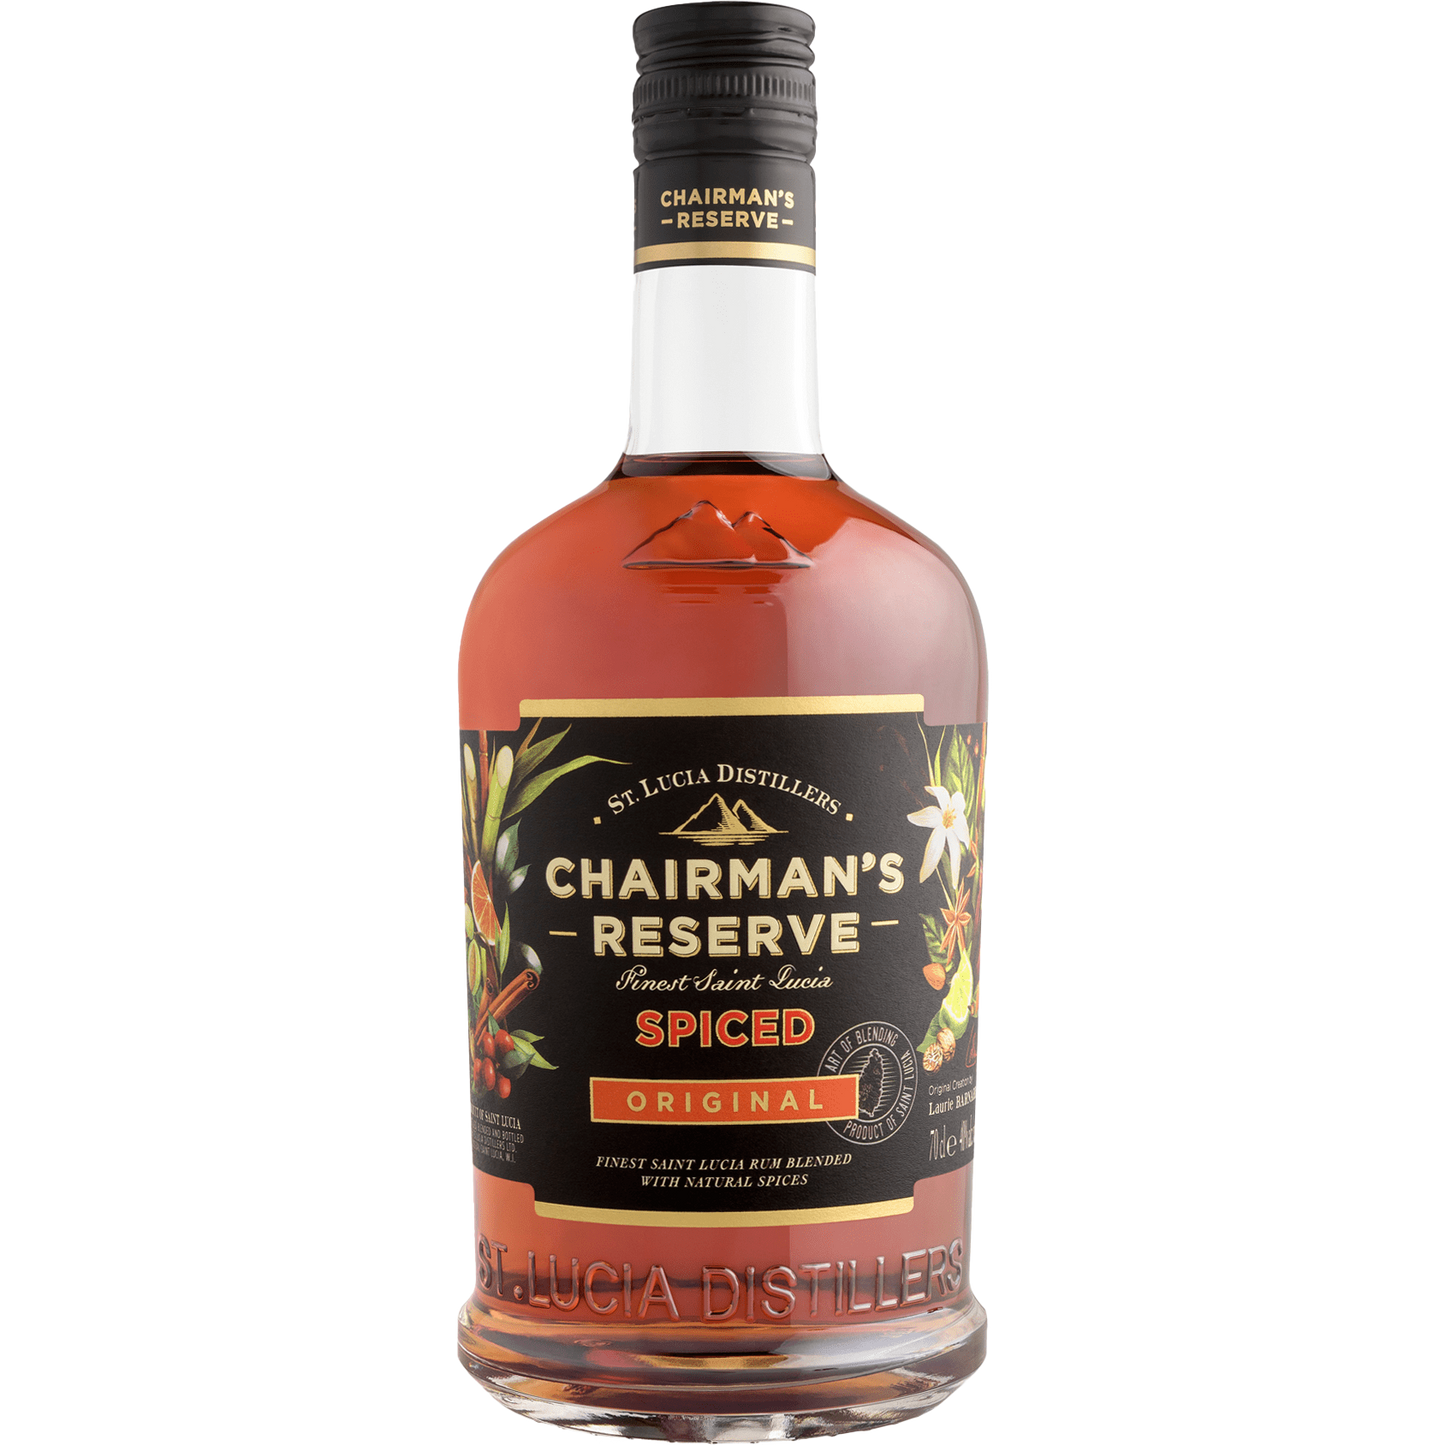 Saint Lucia Distillers 'Chairman's Reserve' Original Spiced Rum